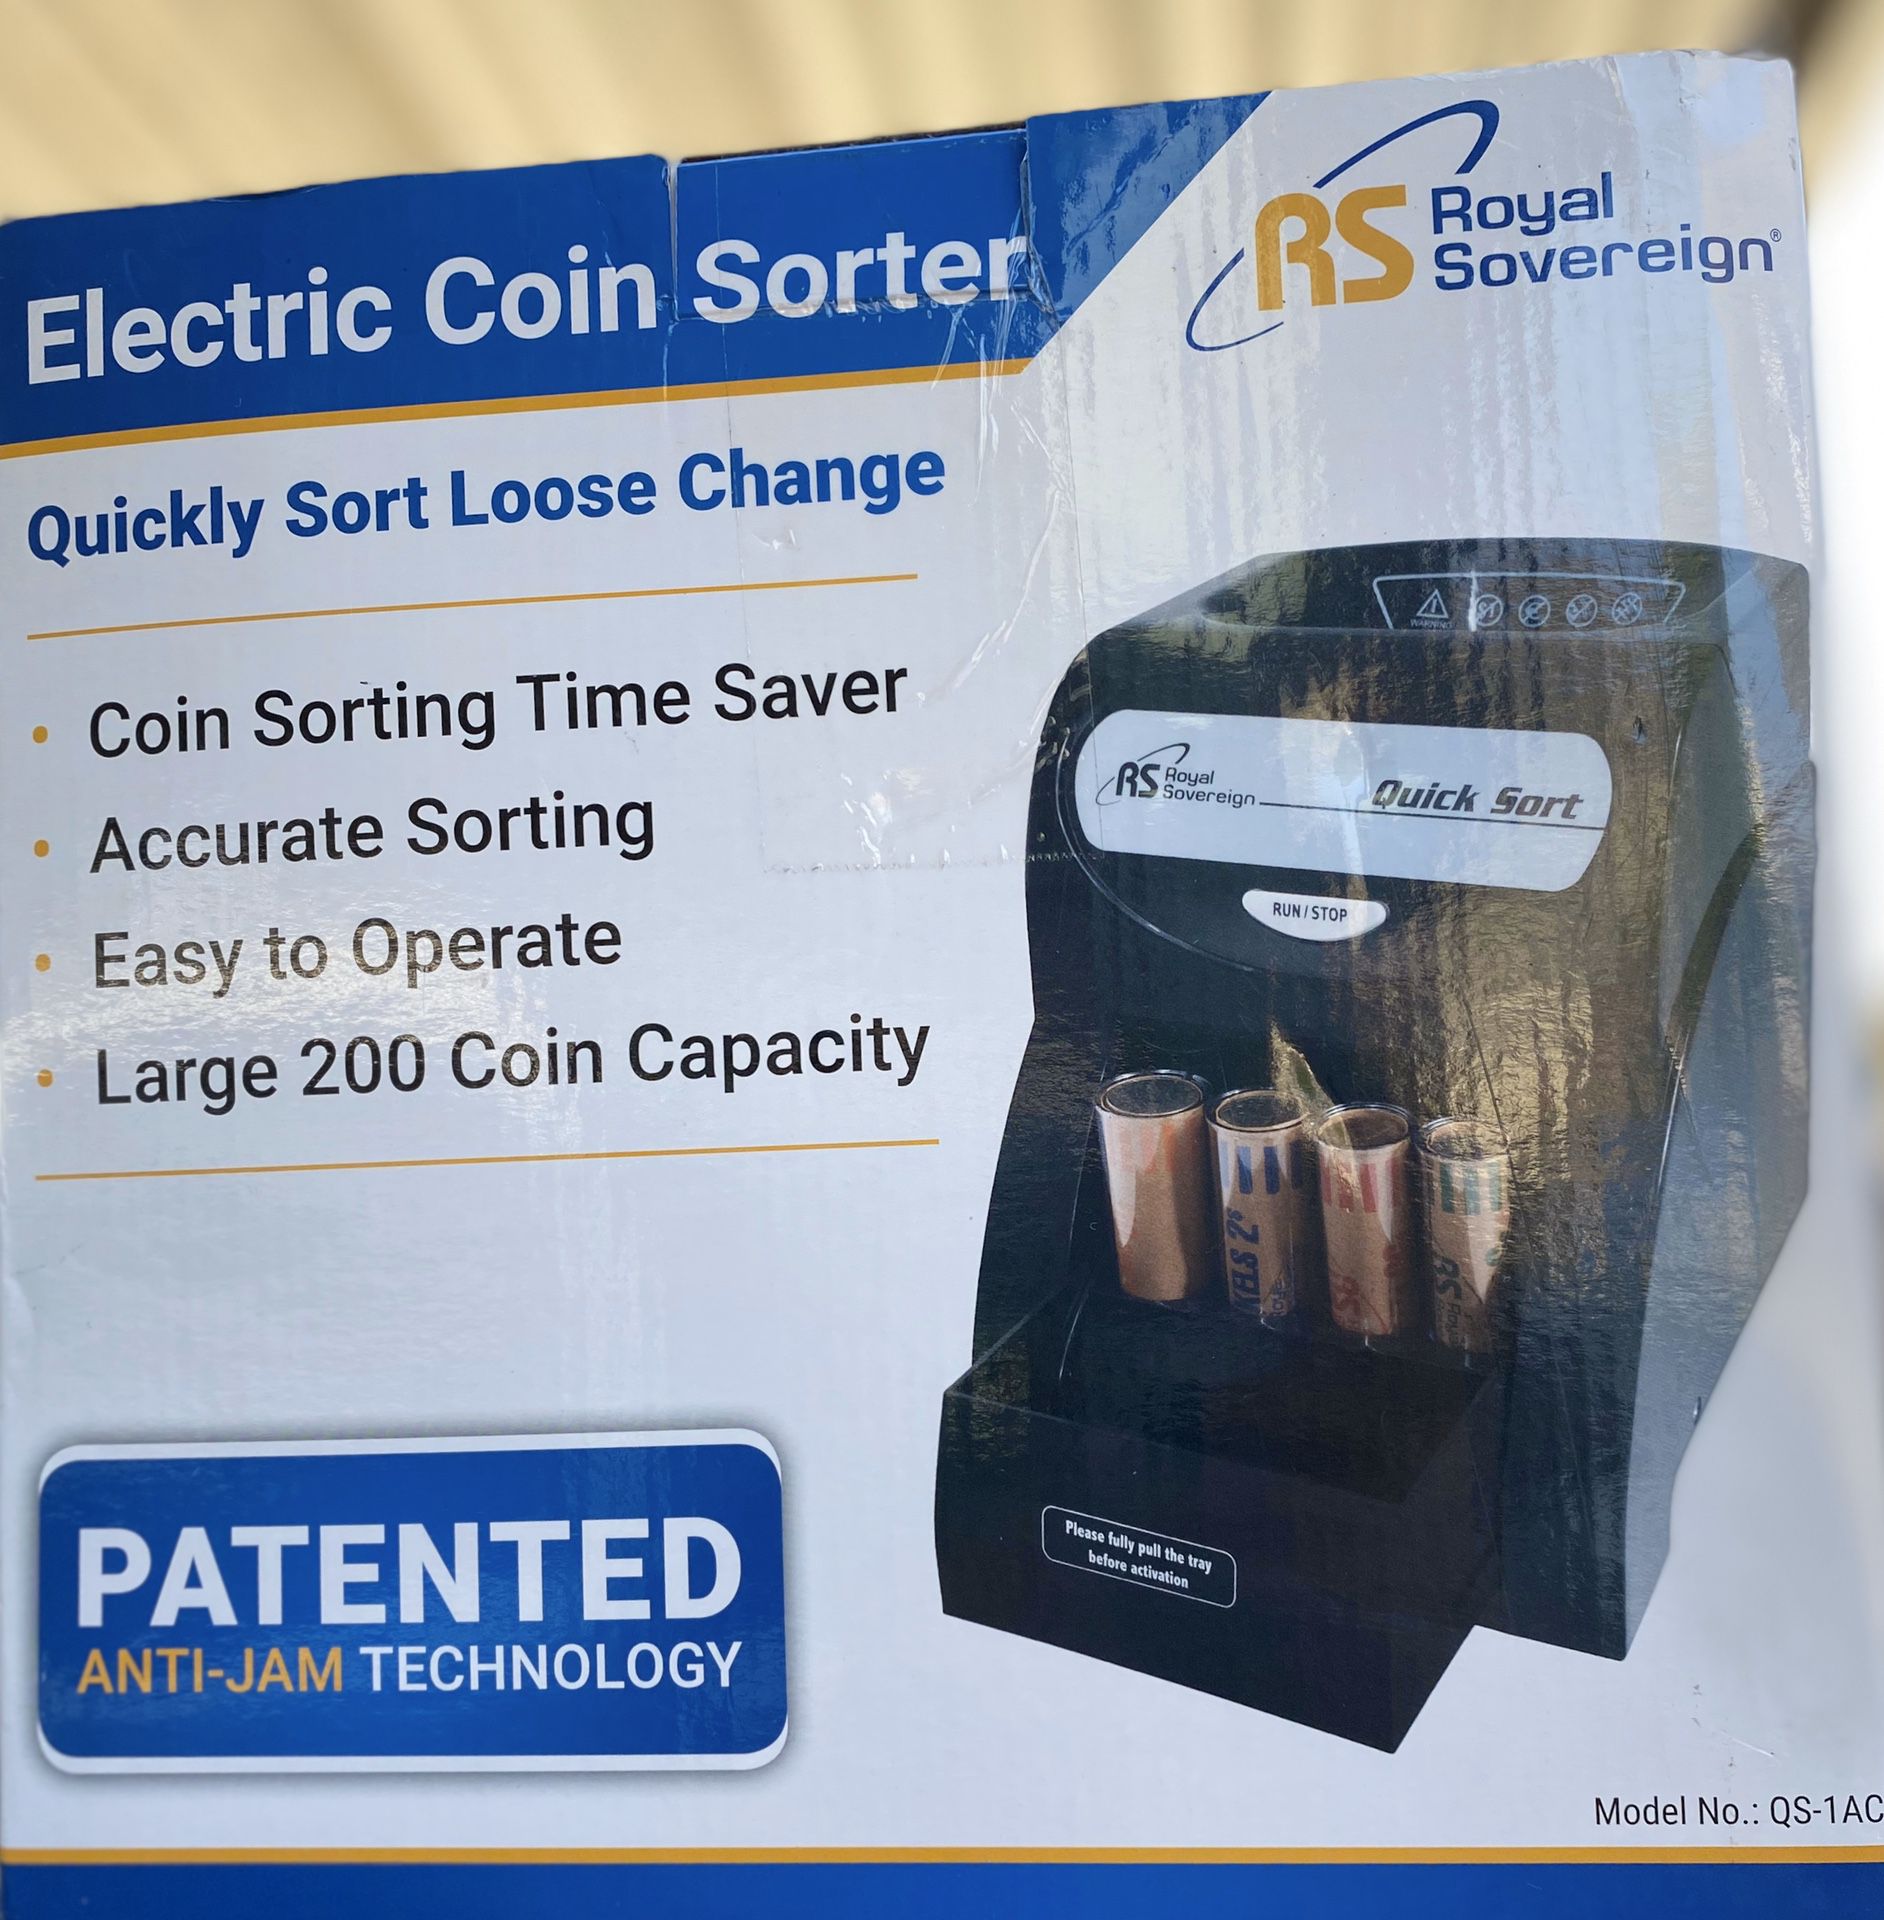 Electric Coin Sorter